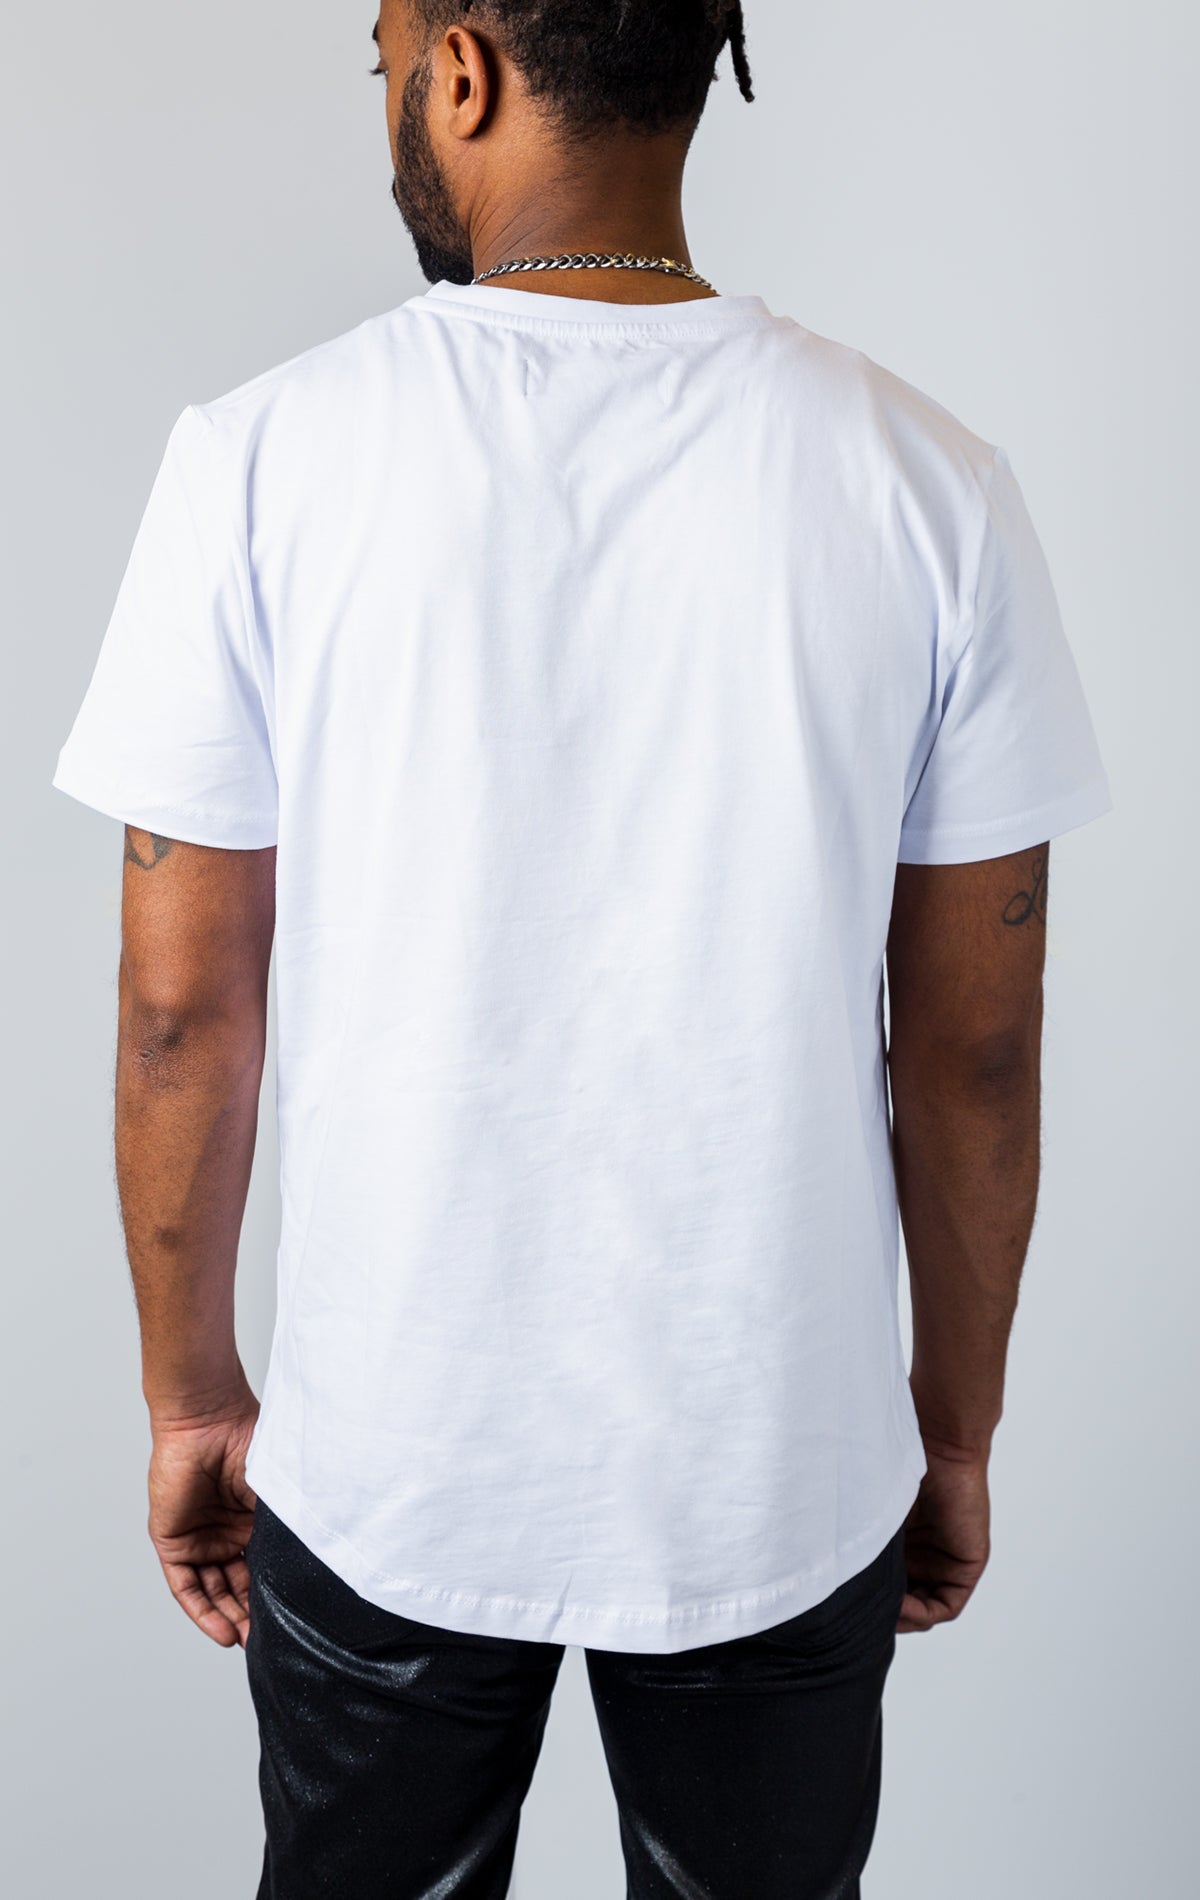 White T shirt back 